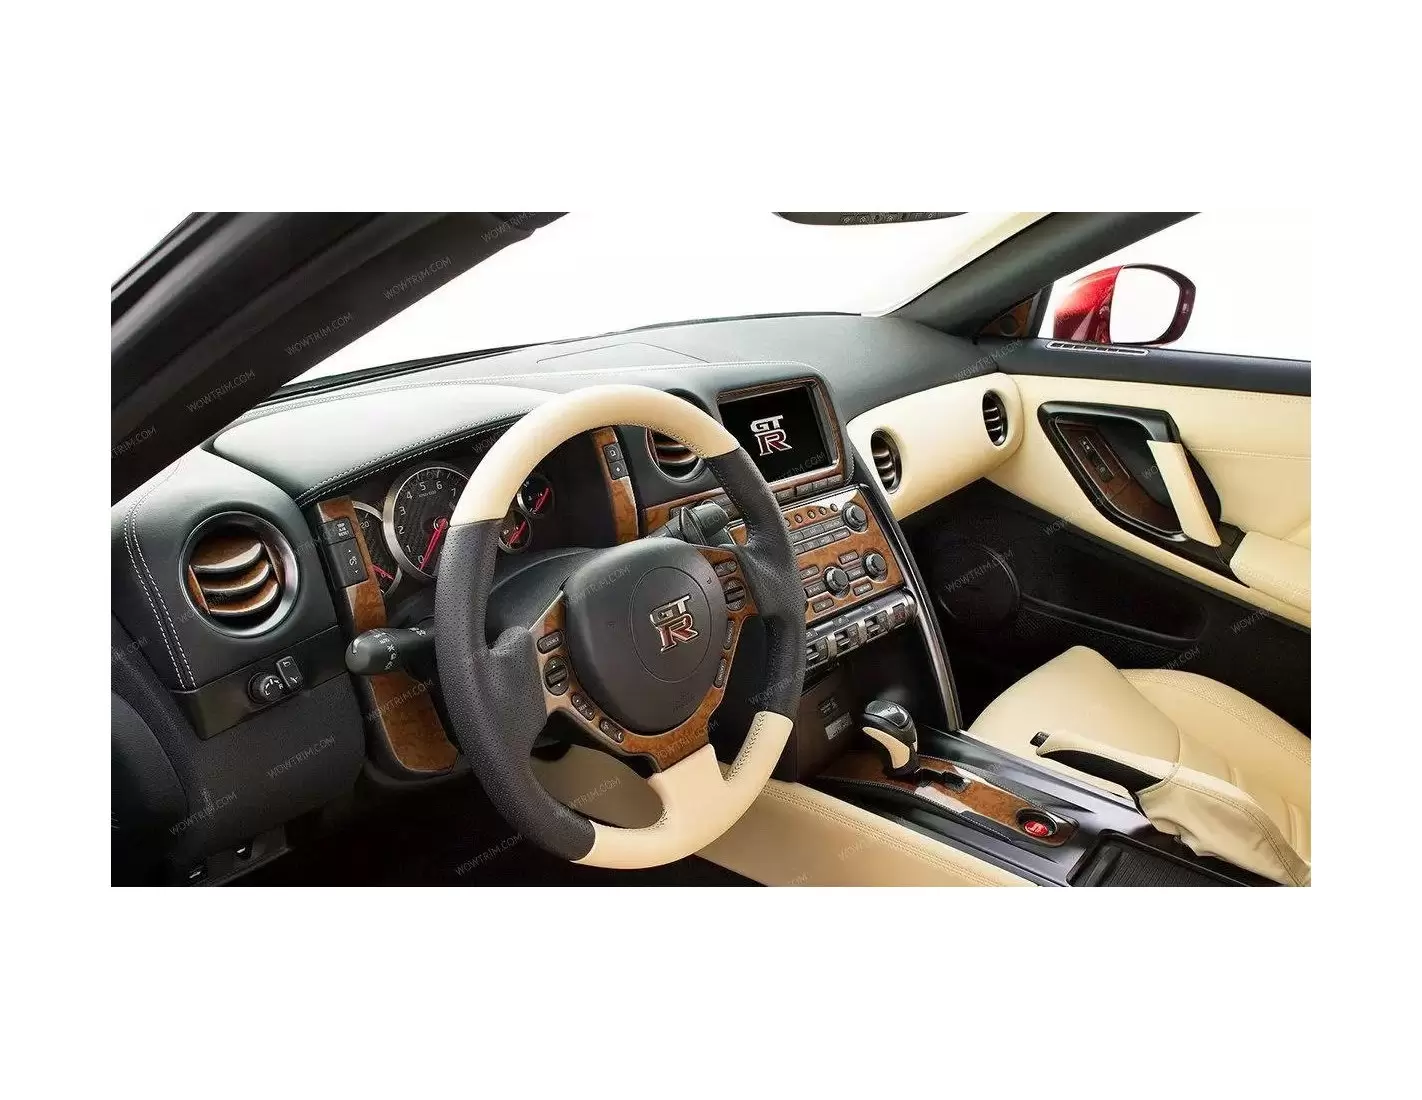 Nissan GT-R 2009-UP Voll Satz BD innenausstattung armaturendekor cockpit dekor - 1- Cockpit Dekor Innenraum